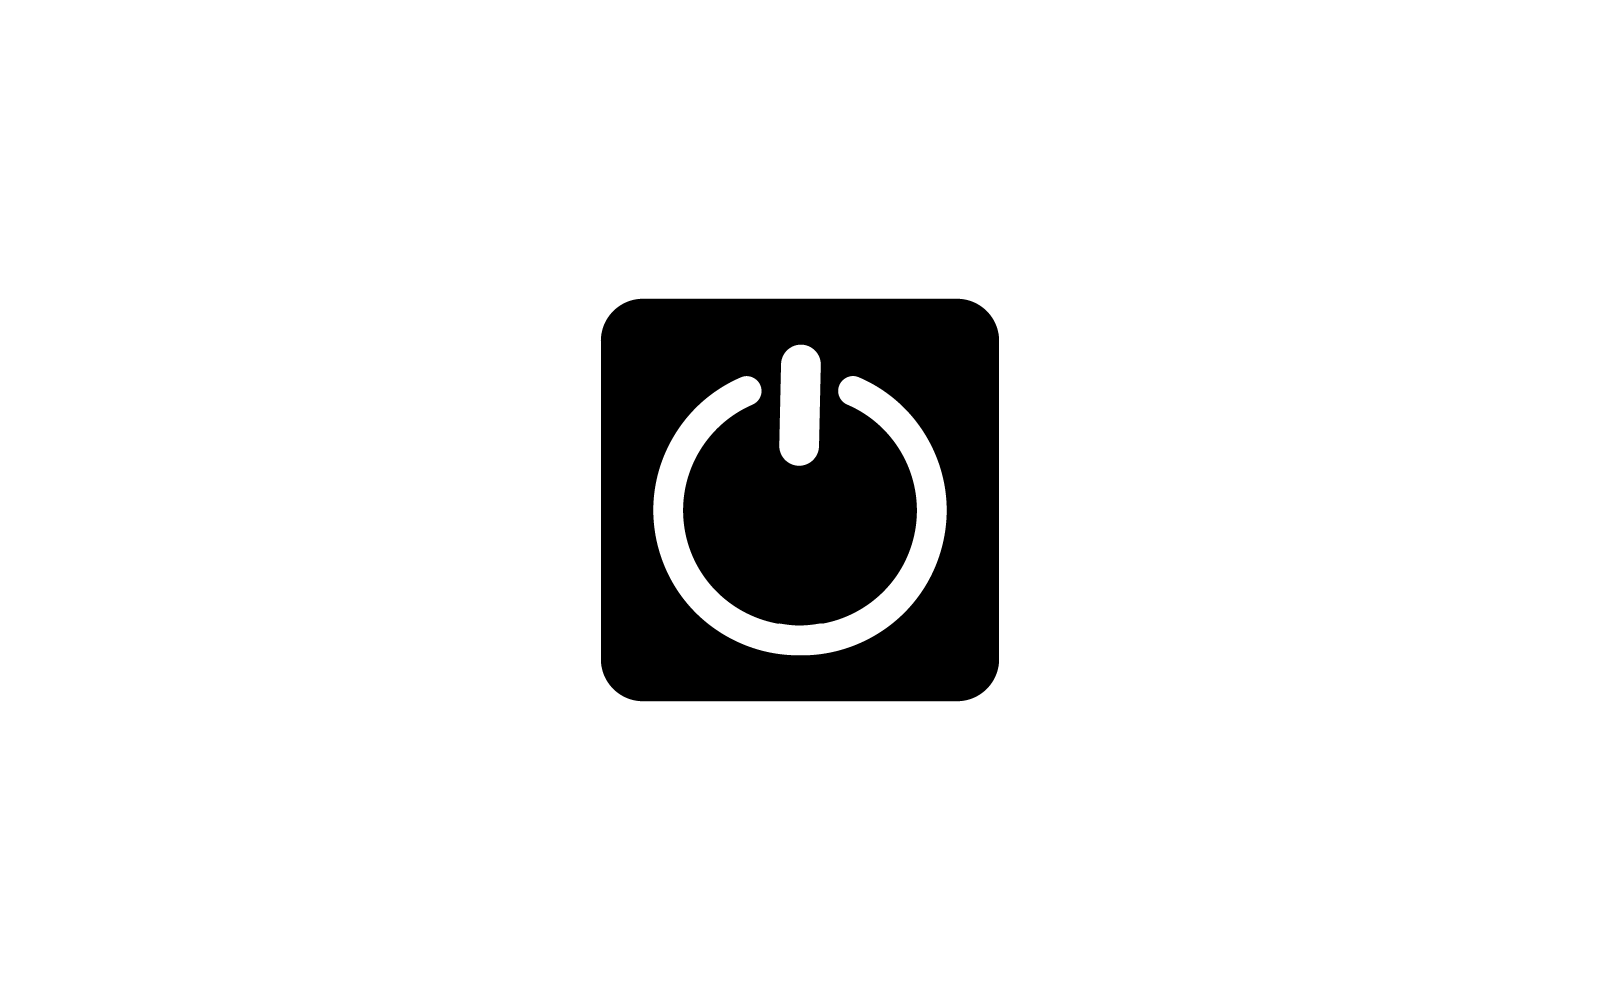 Power button flat design illustration template